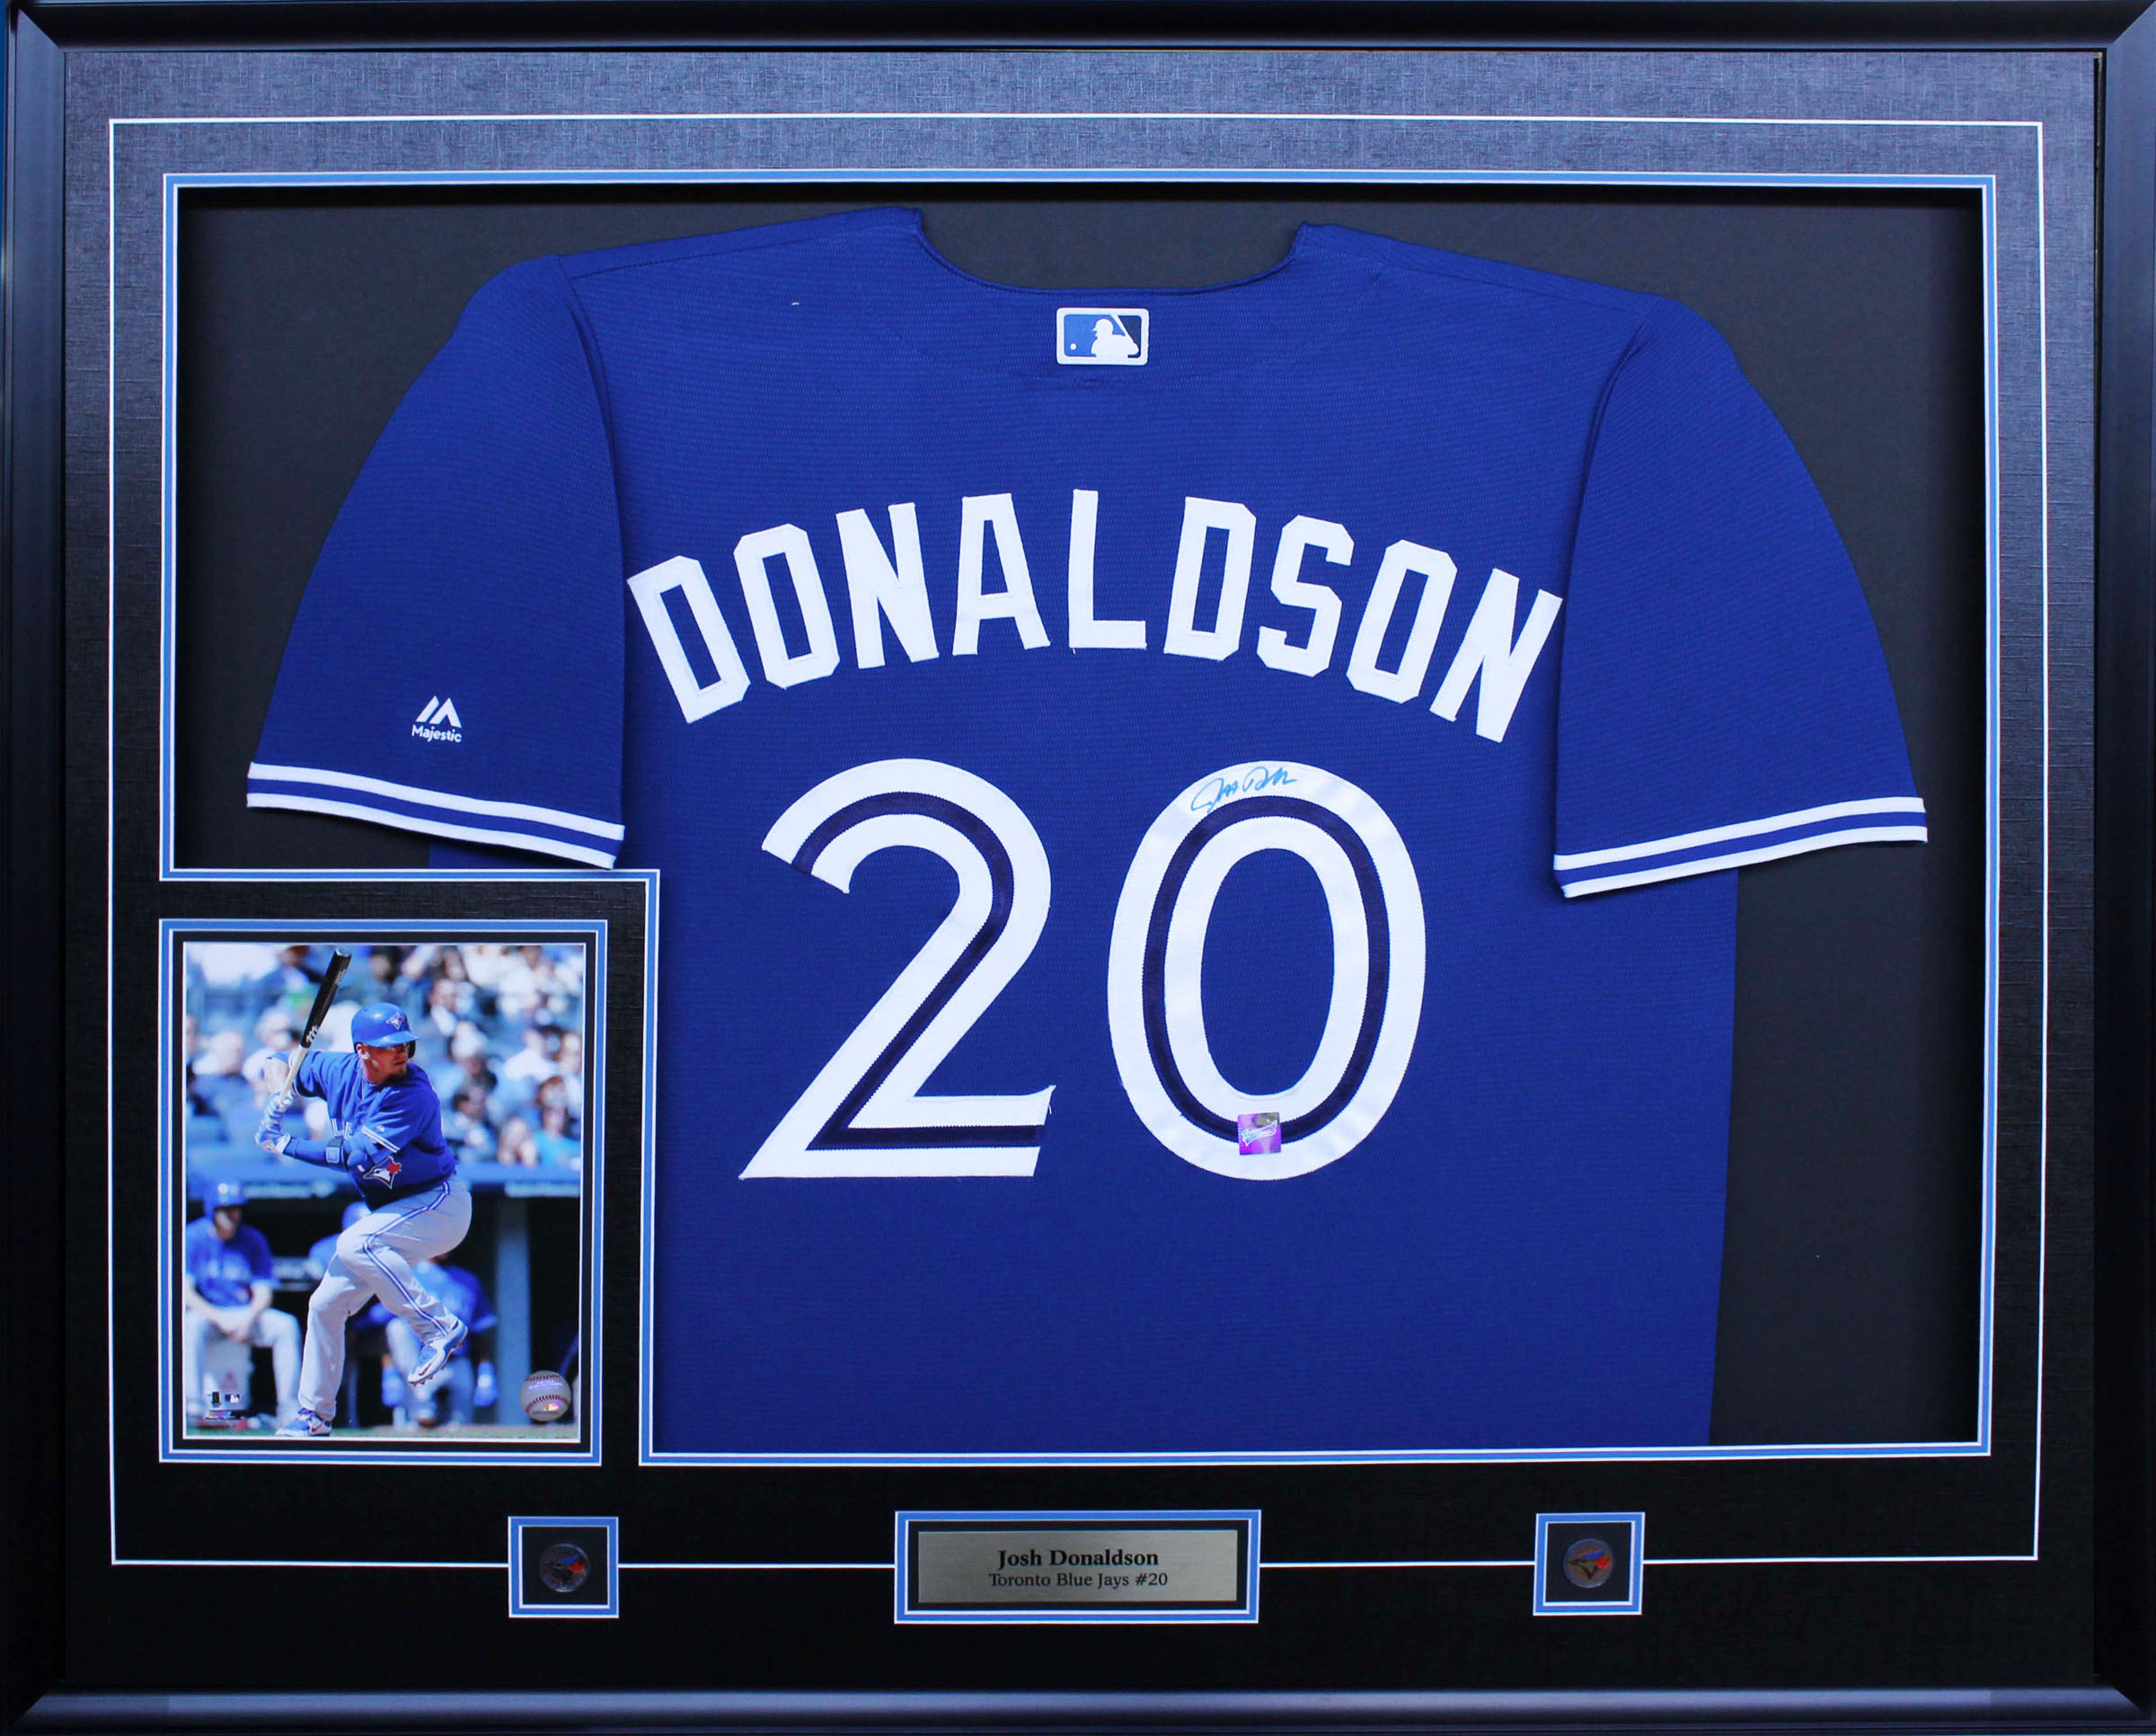 signed donaldson jersey